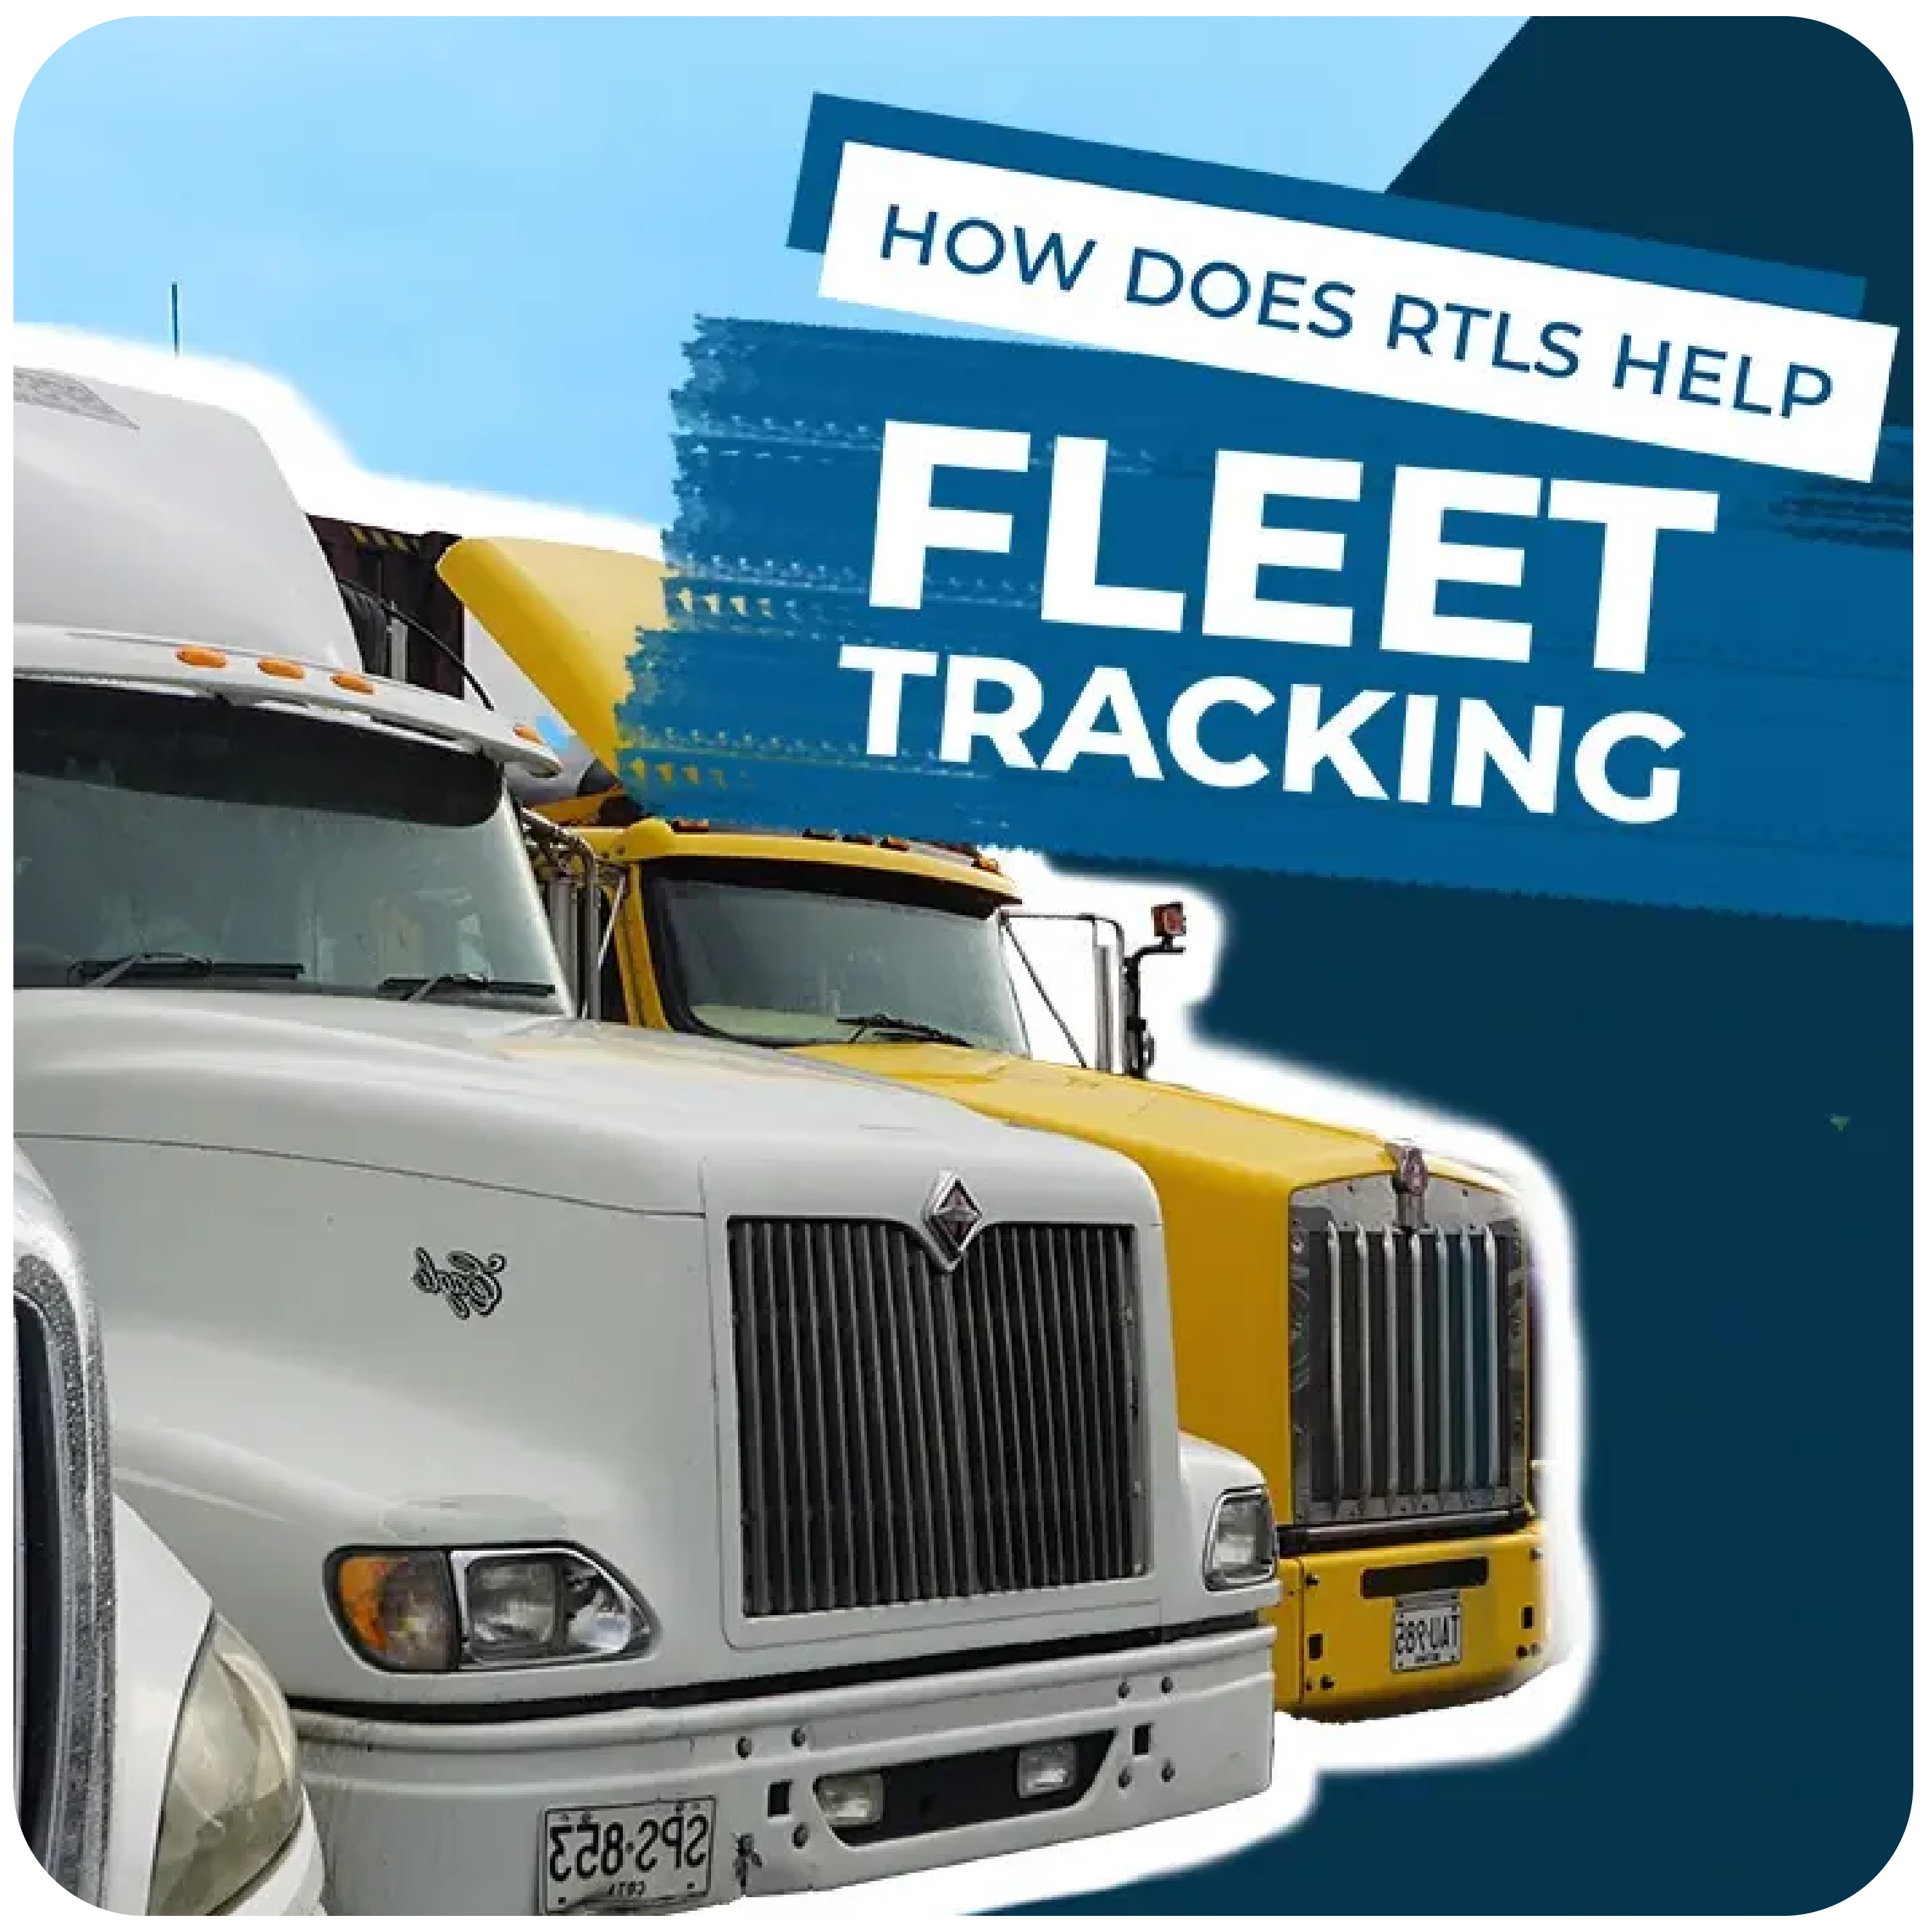 Fleet Tracking